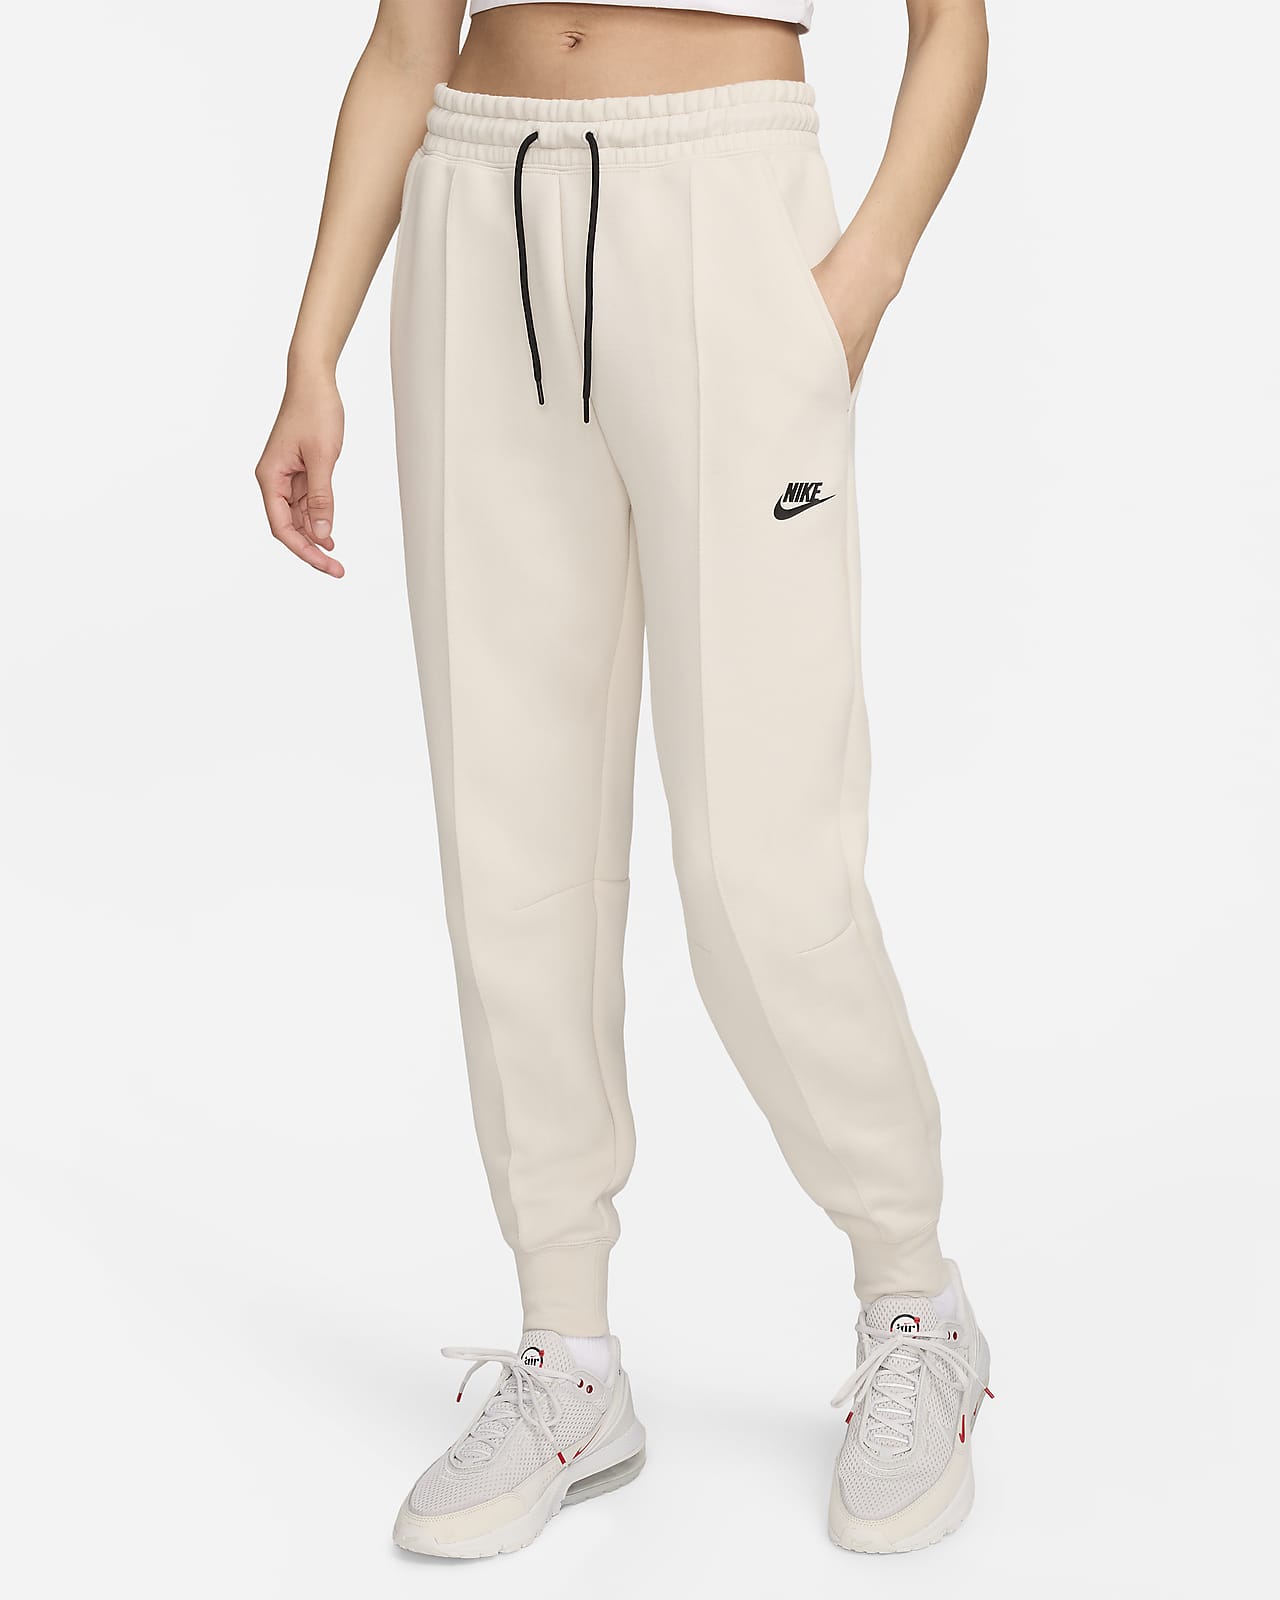 Nike Sportswear Tech Fleece joggingbroek met halfhoge taille voor dames